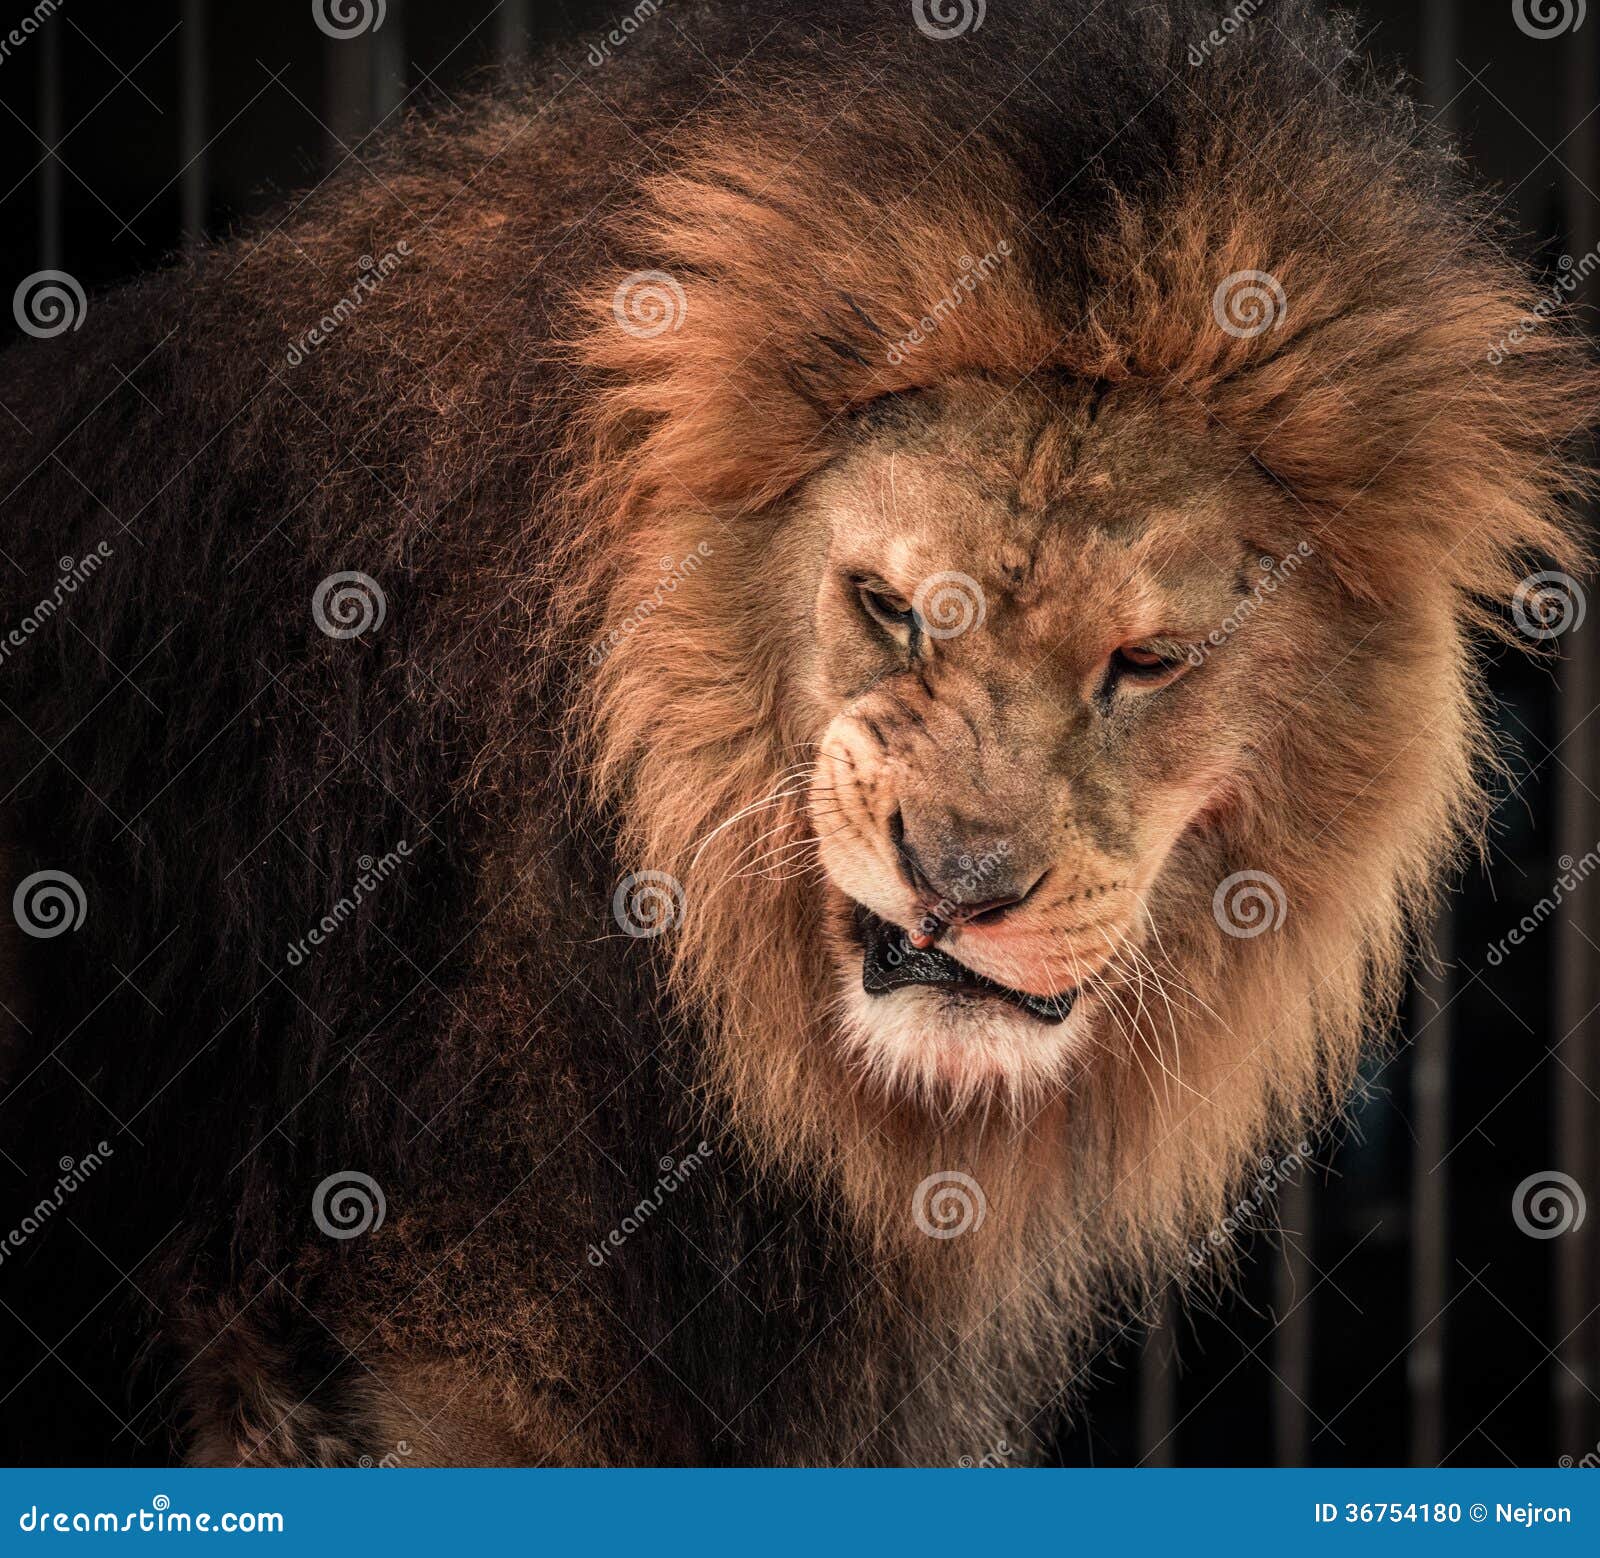 Roaring lion stock photo. Image of open, dangerous, hunter - 36754180